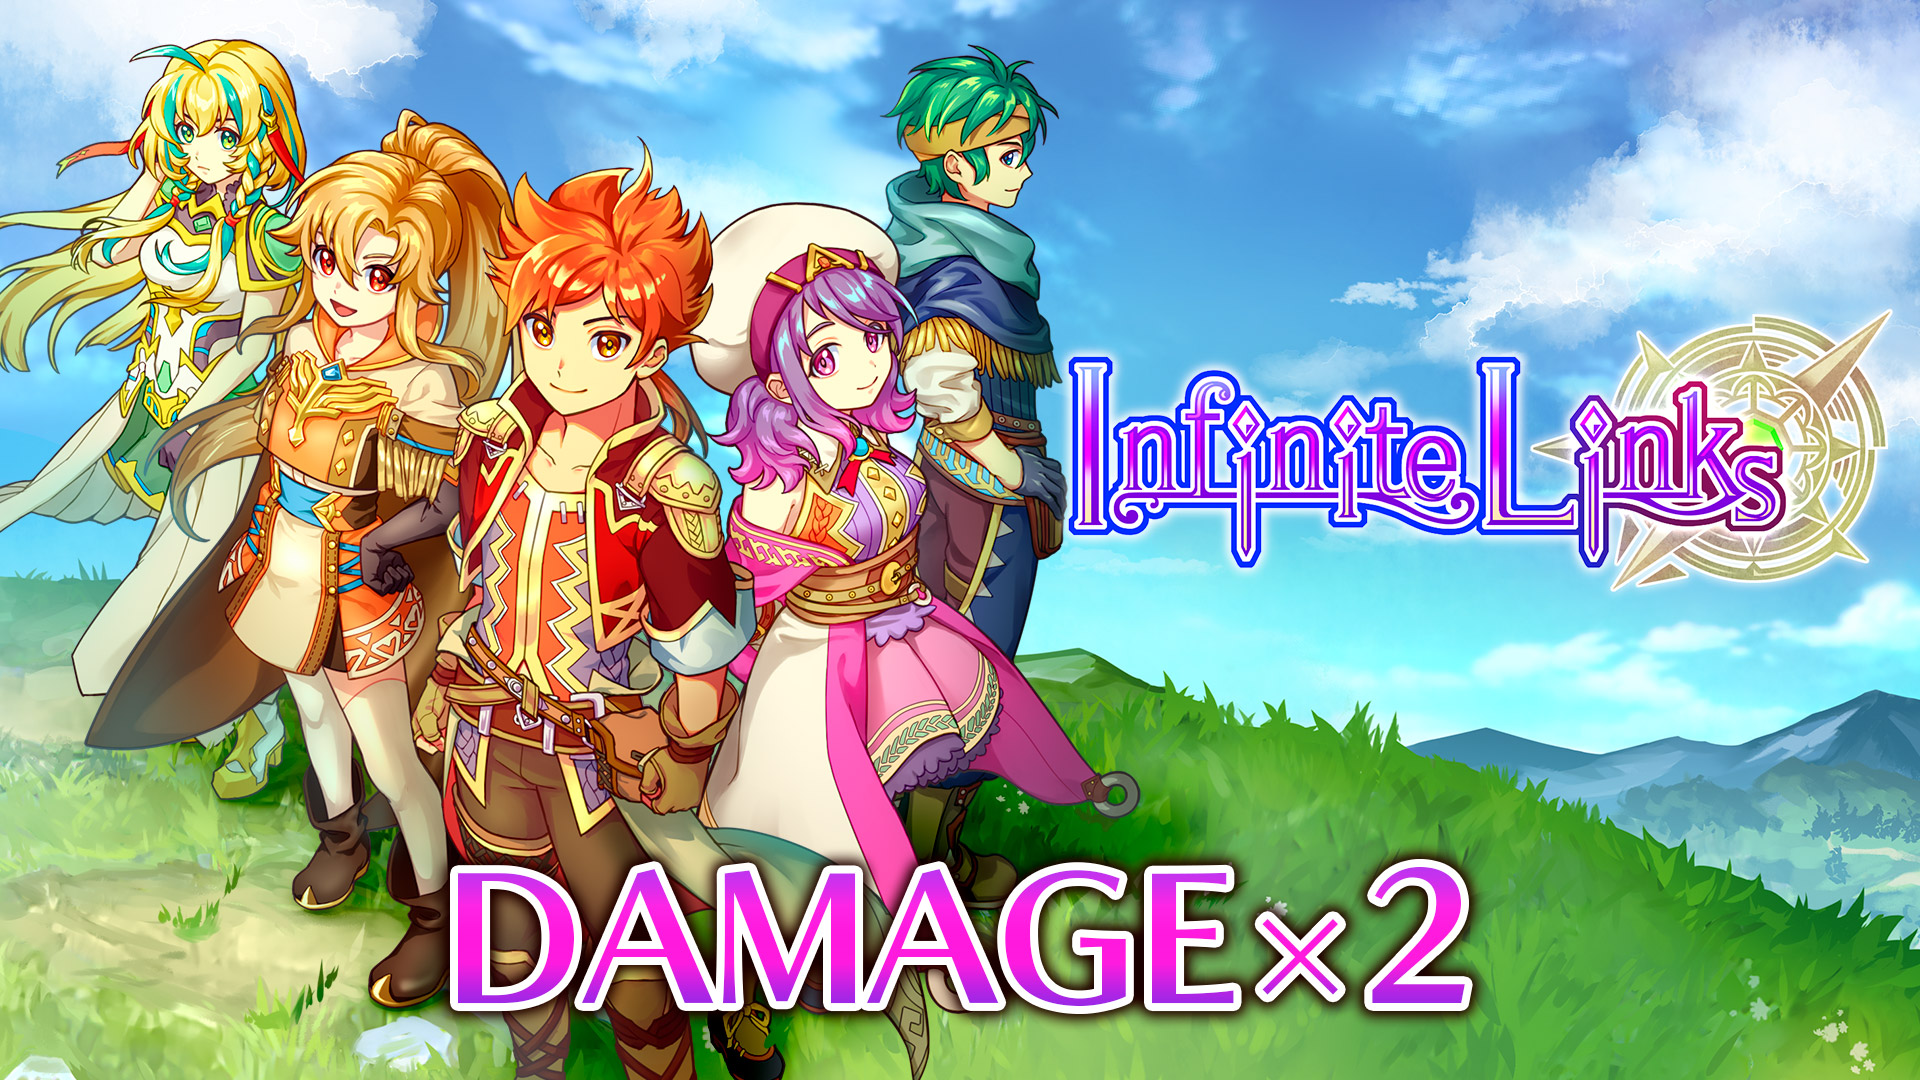 Damage x2 - Infinite Links